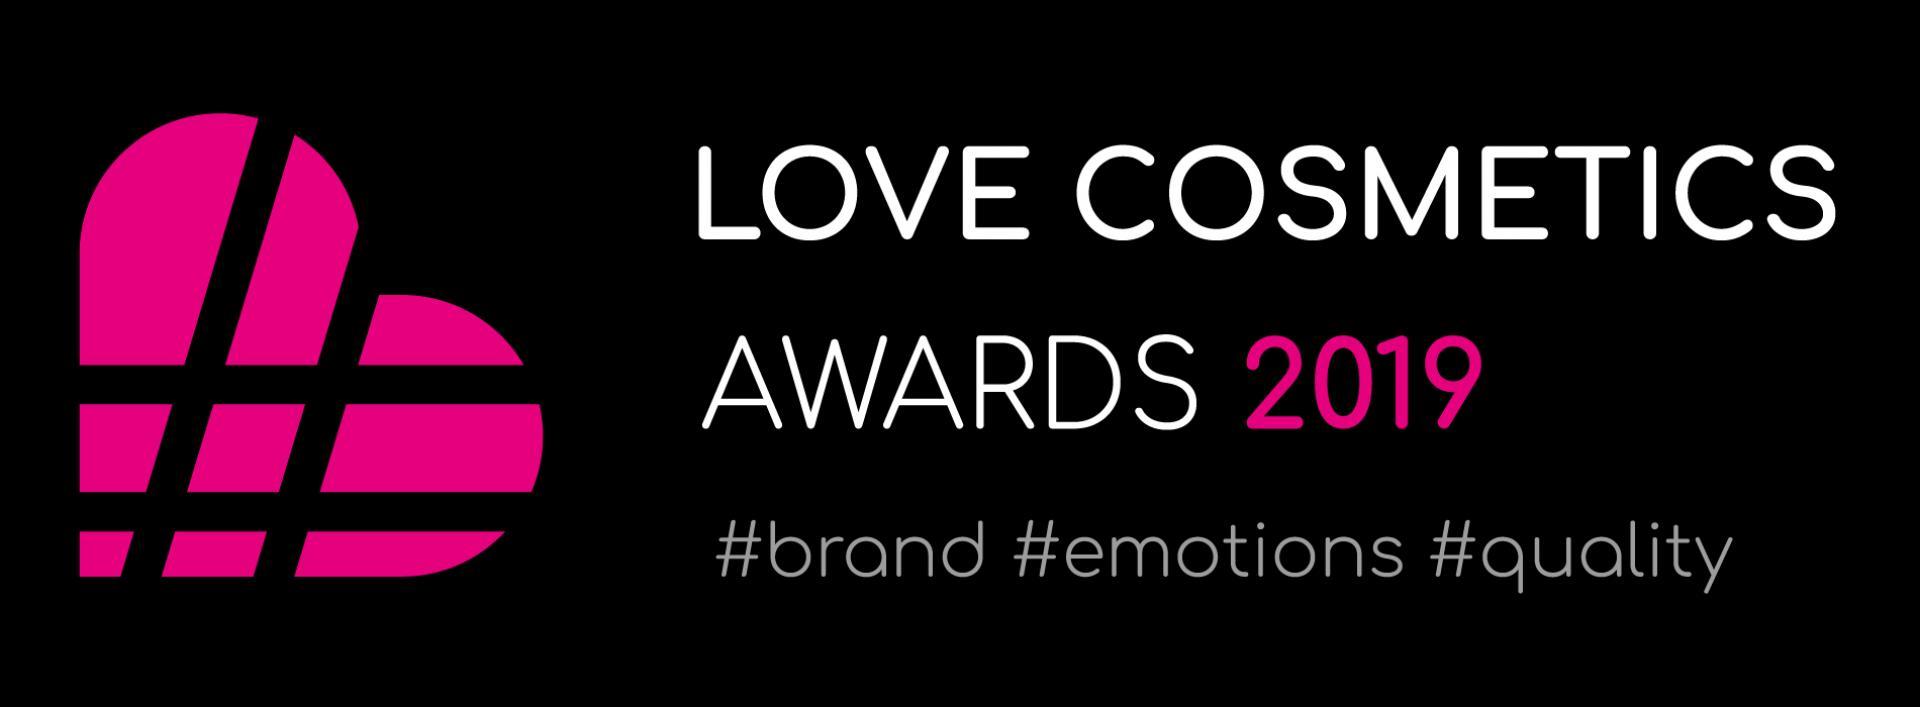  Love Cosmetics Awards – brand, emotions, quality